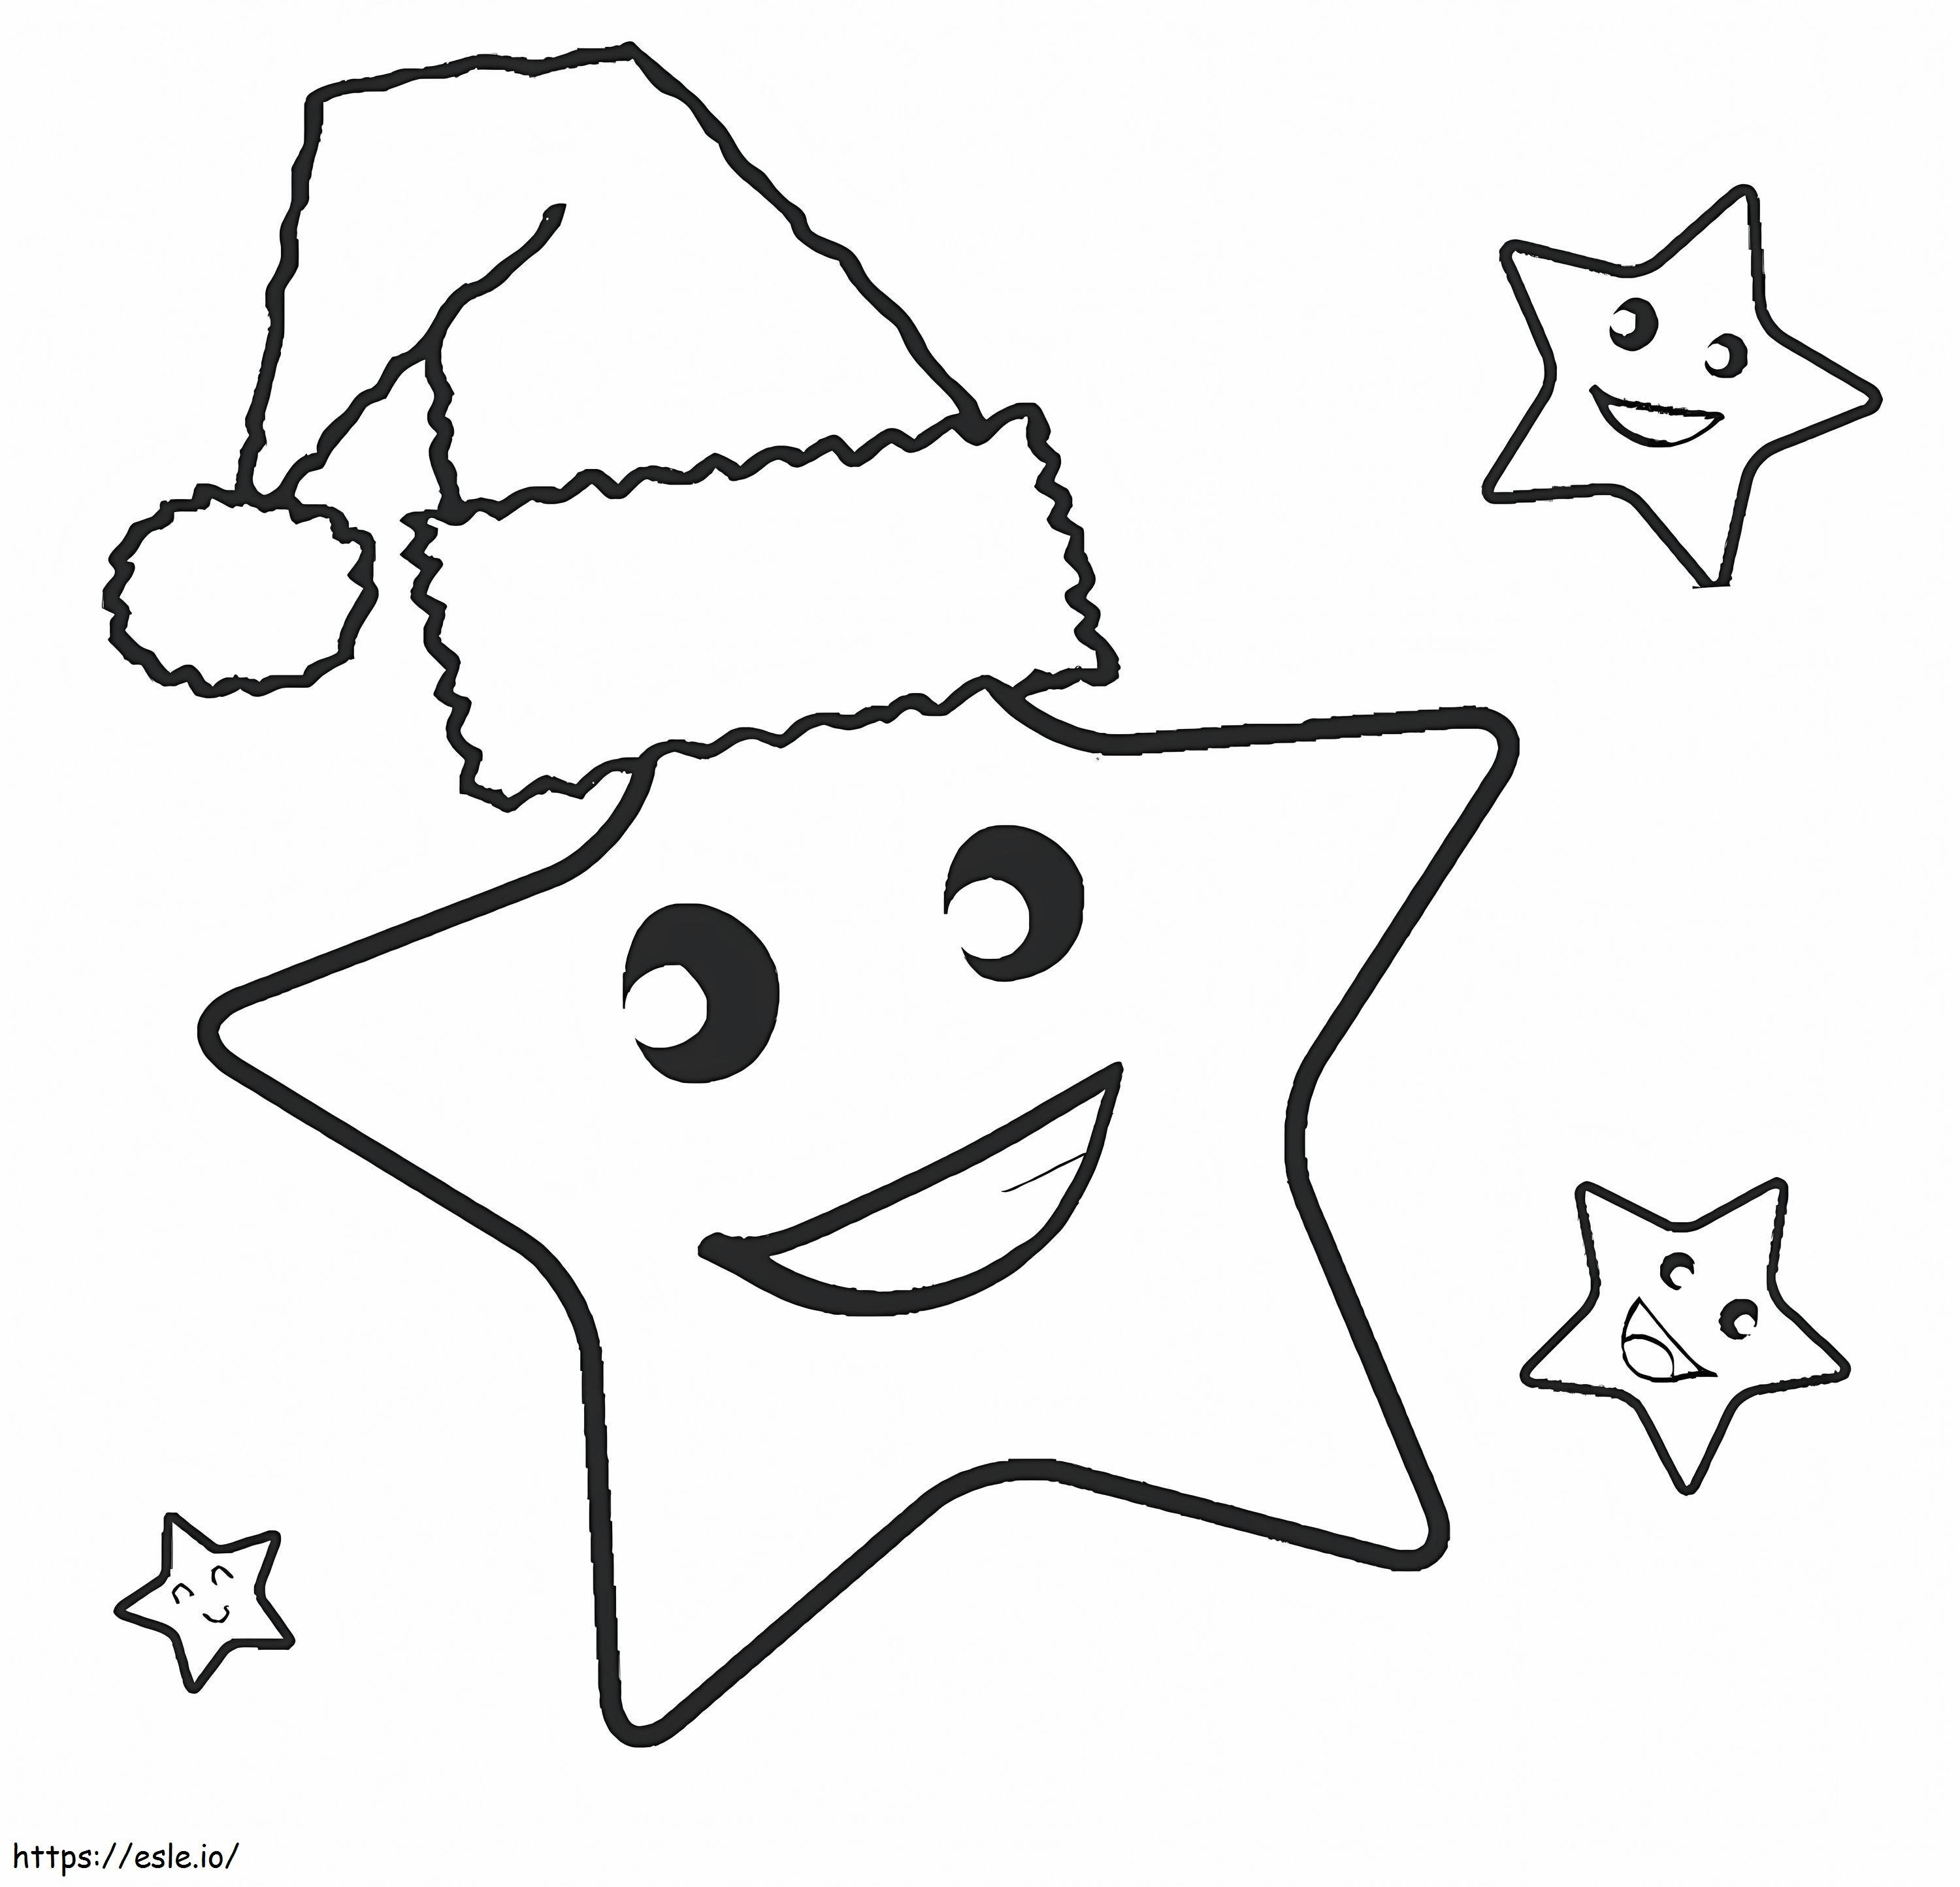 Stars At Christmas coloring page